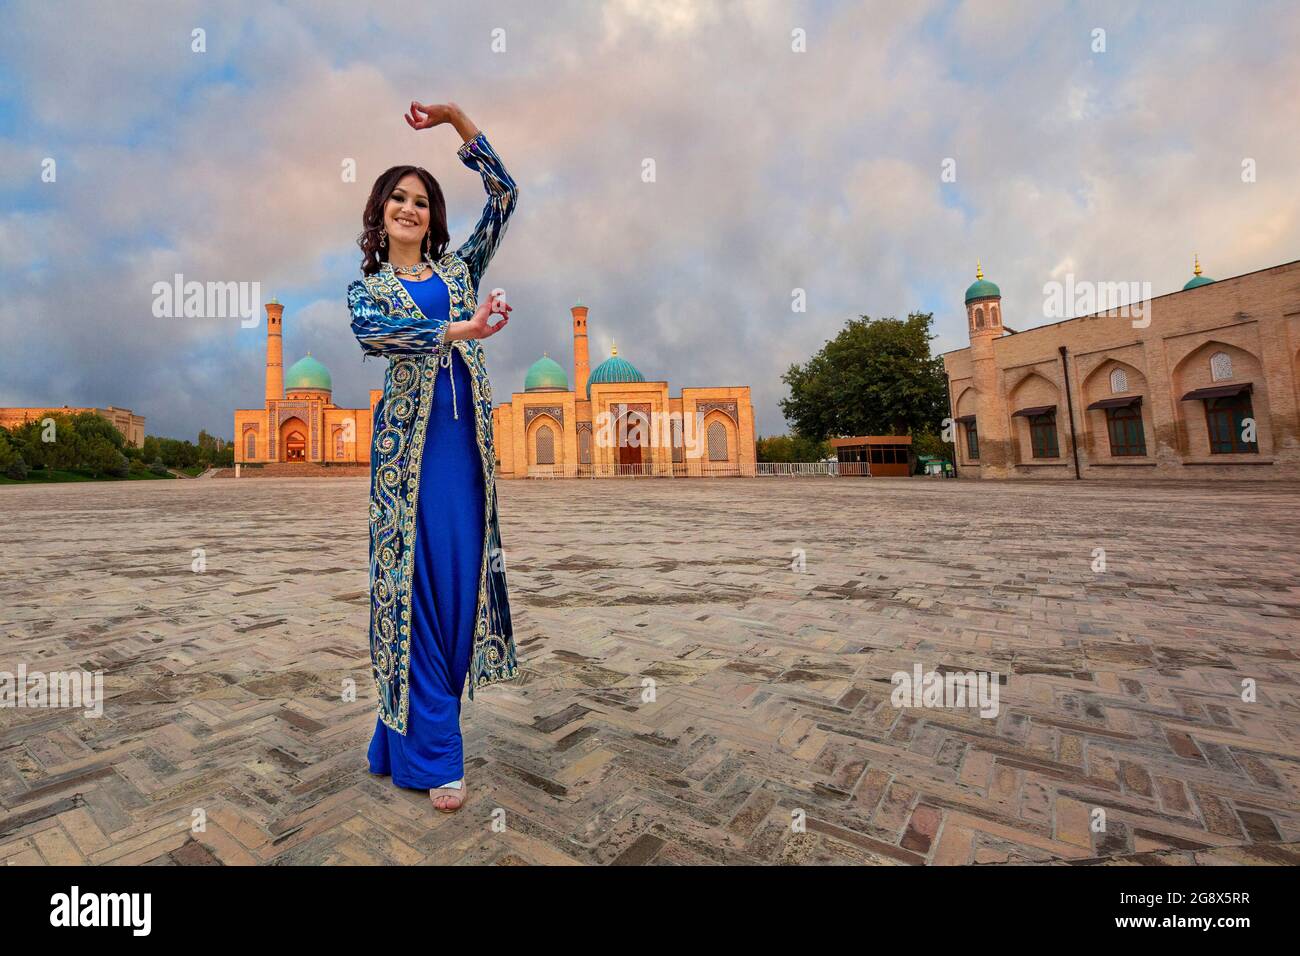 Uzbek woman in local dress with Khast Imam Mosque in the background in Tashkent, Uzbekistan Stock Photo